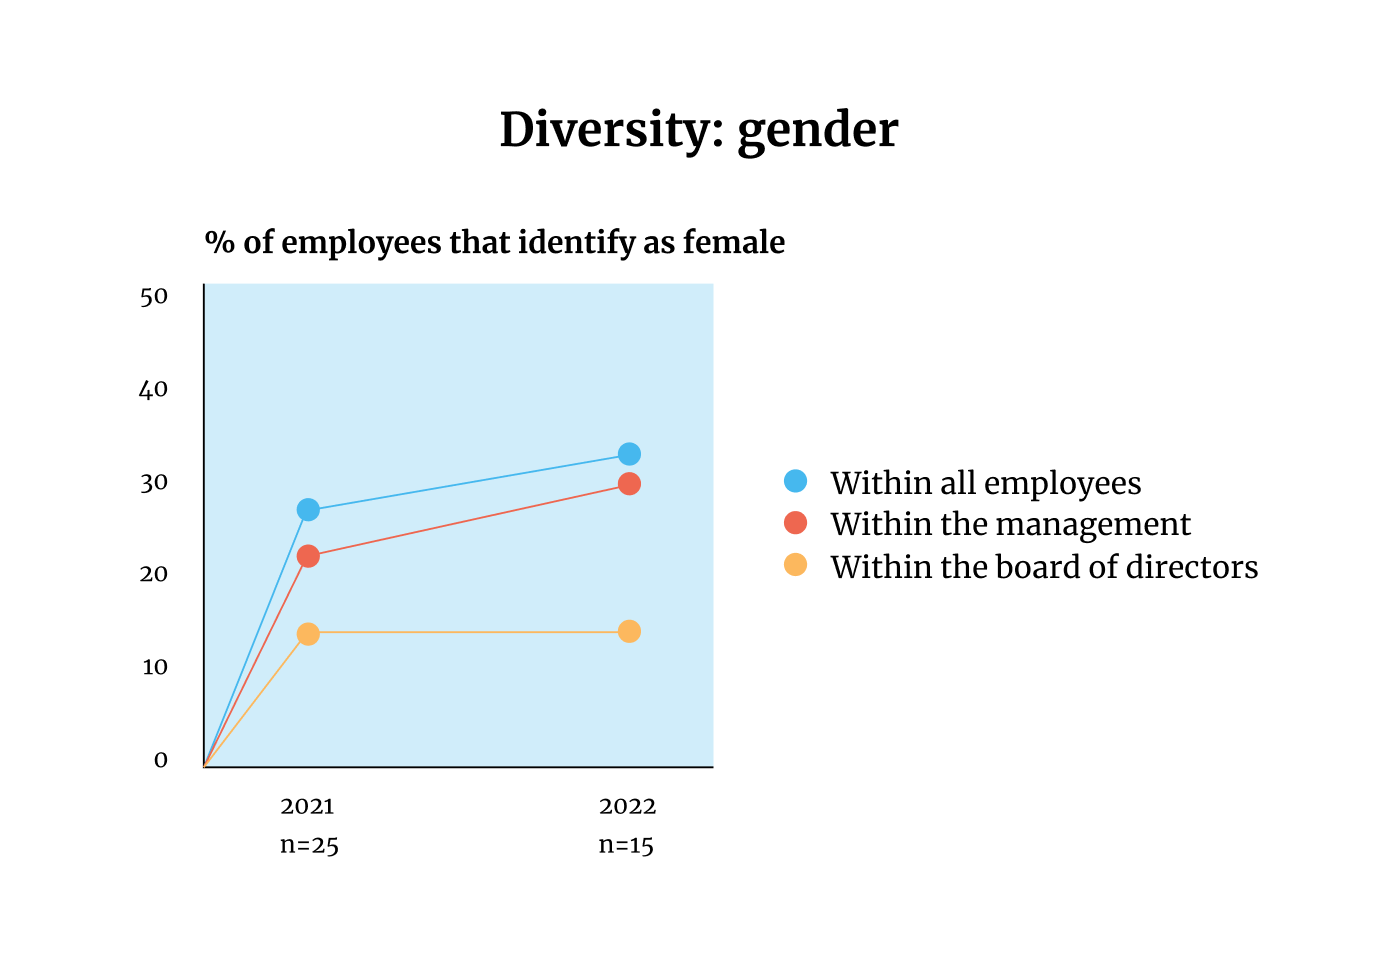 ESG Survey - Diversity: Gender